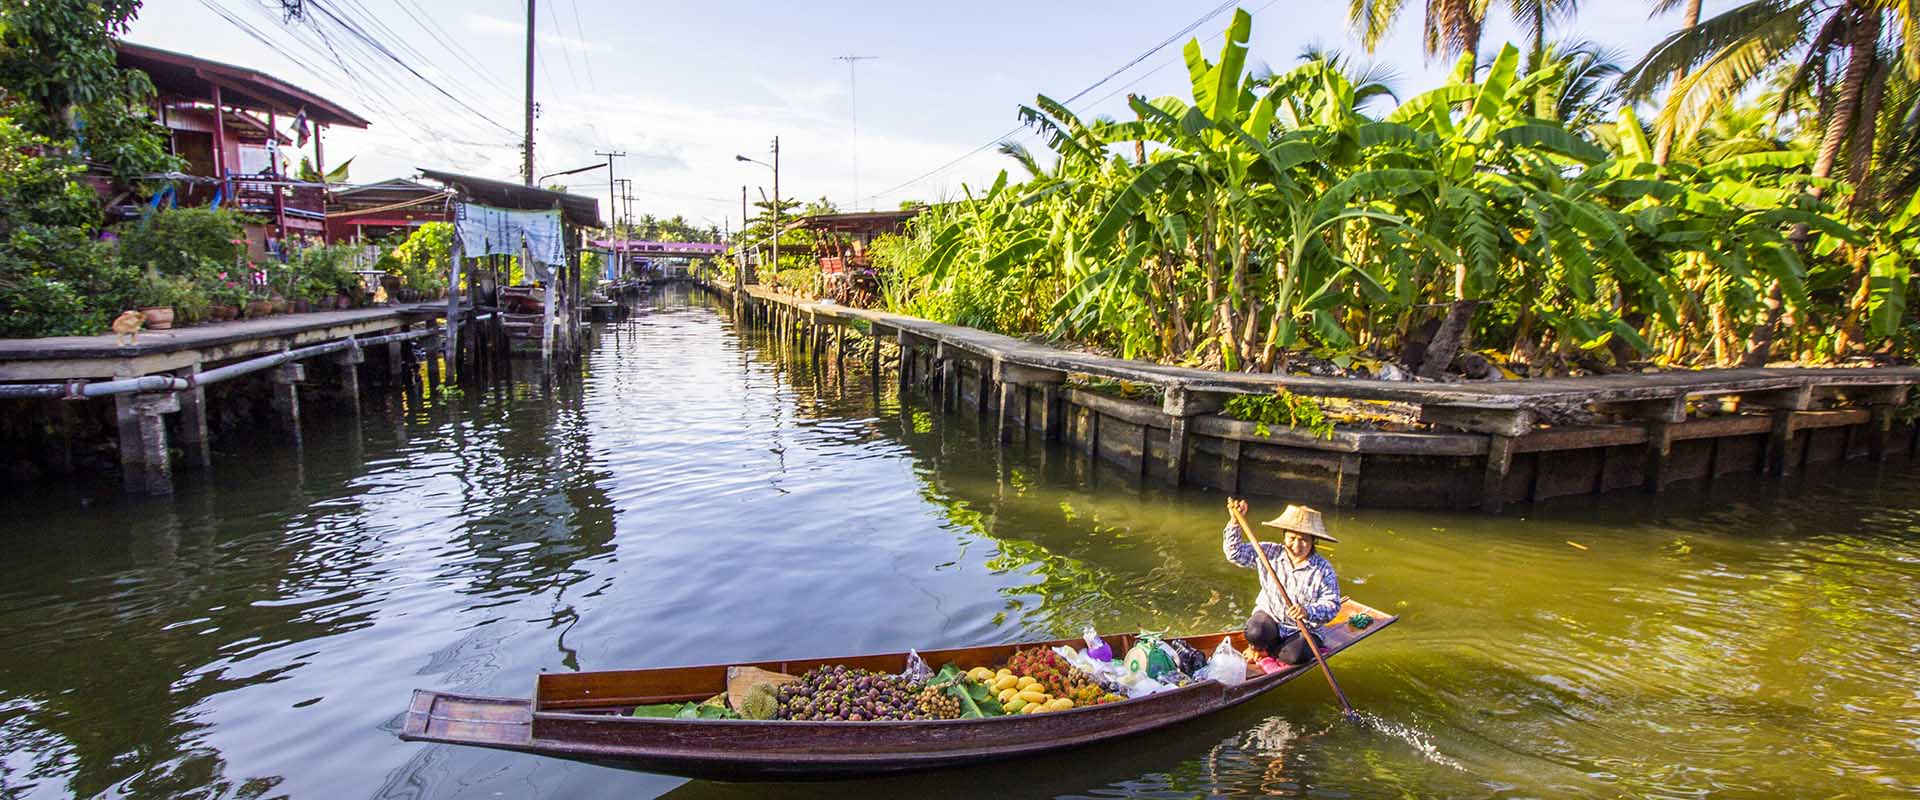 Floating-Market-In-Thailand.jpg